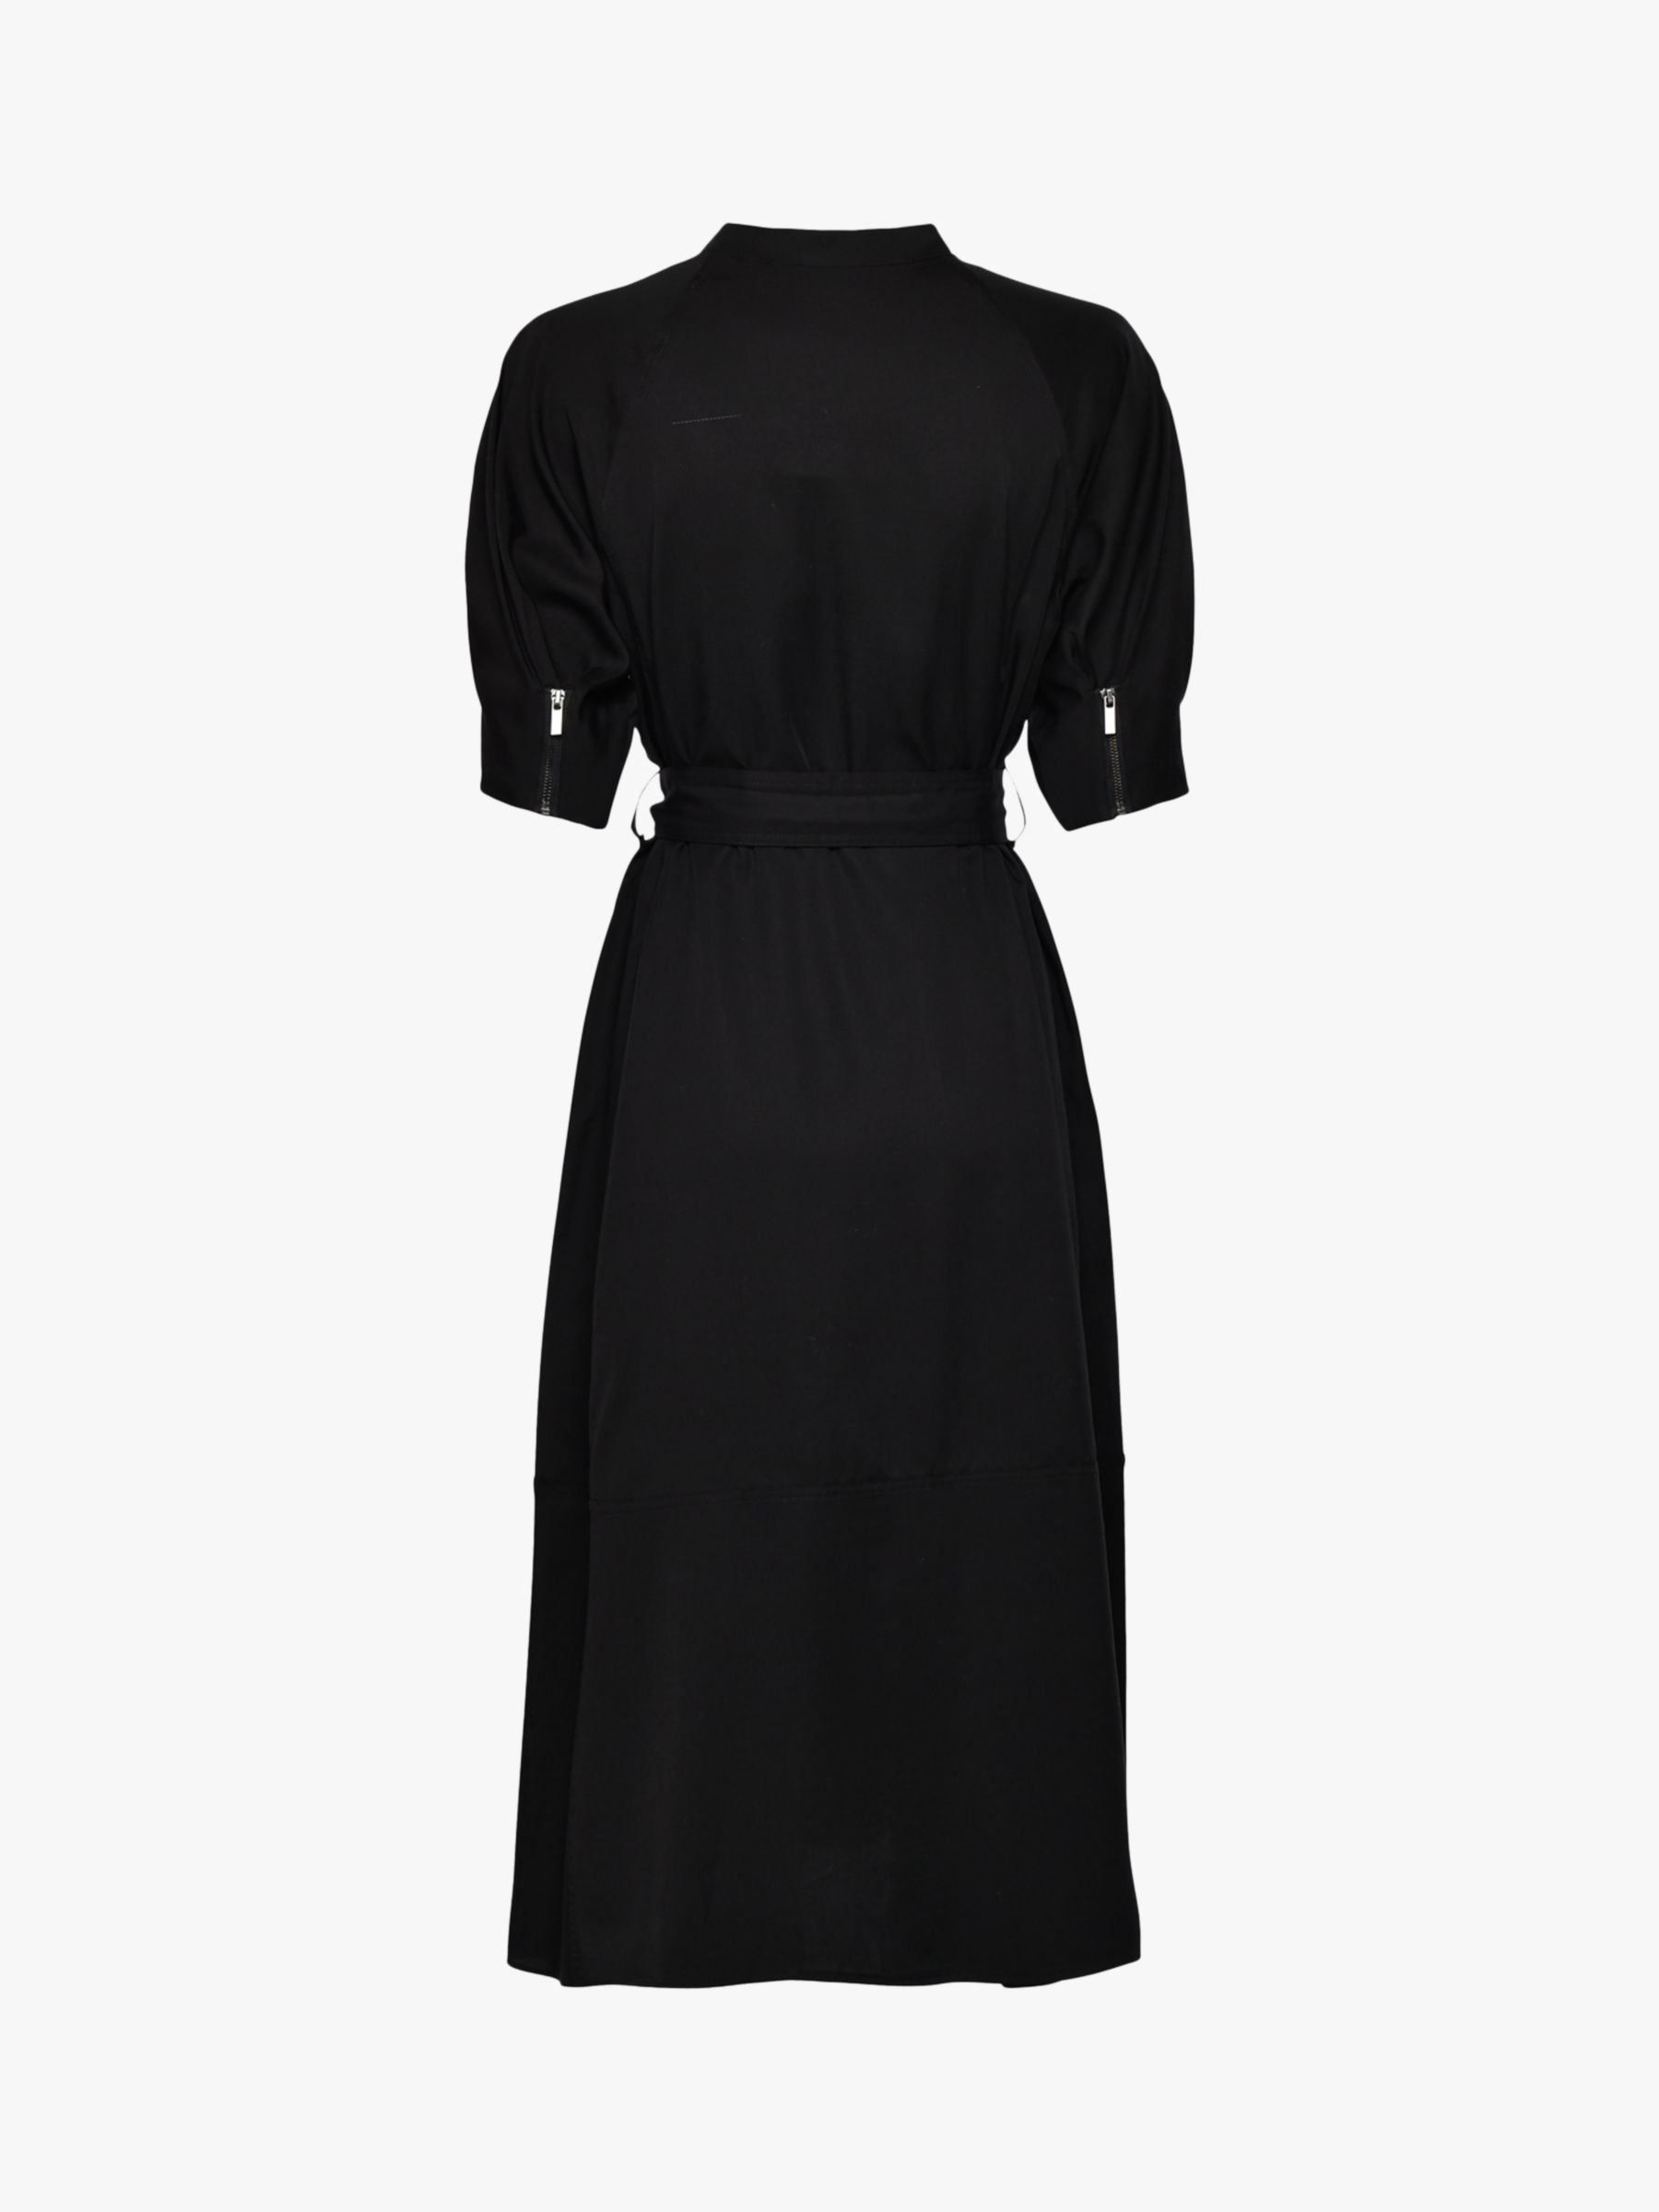 French Connection Clarita Shirt Dress, Black, 6